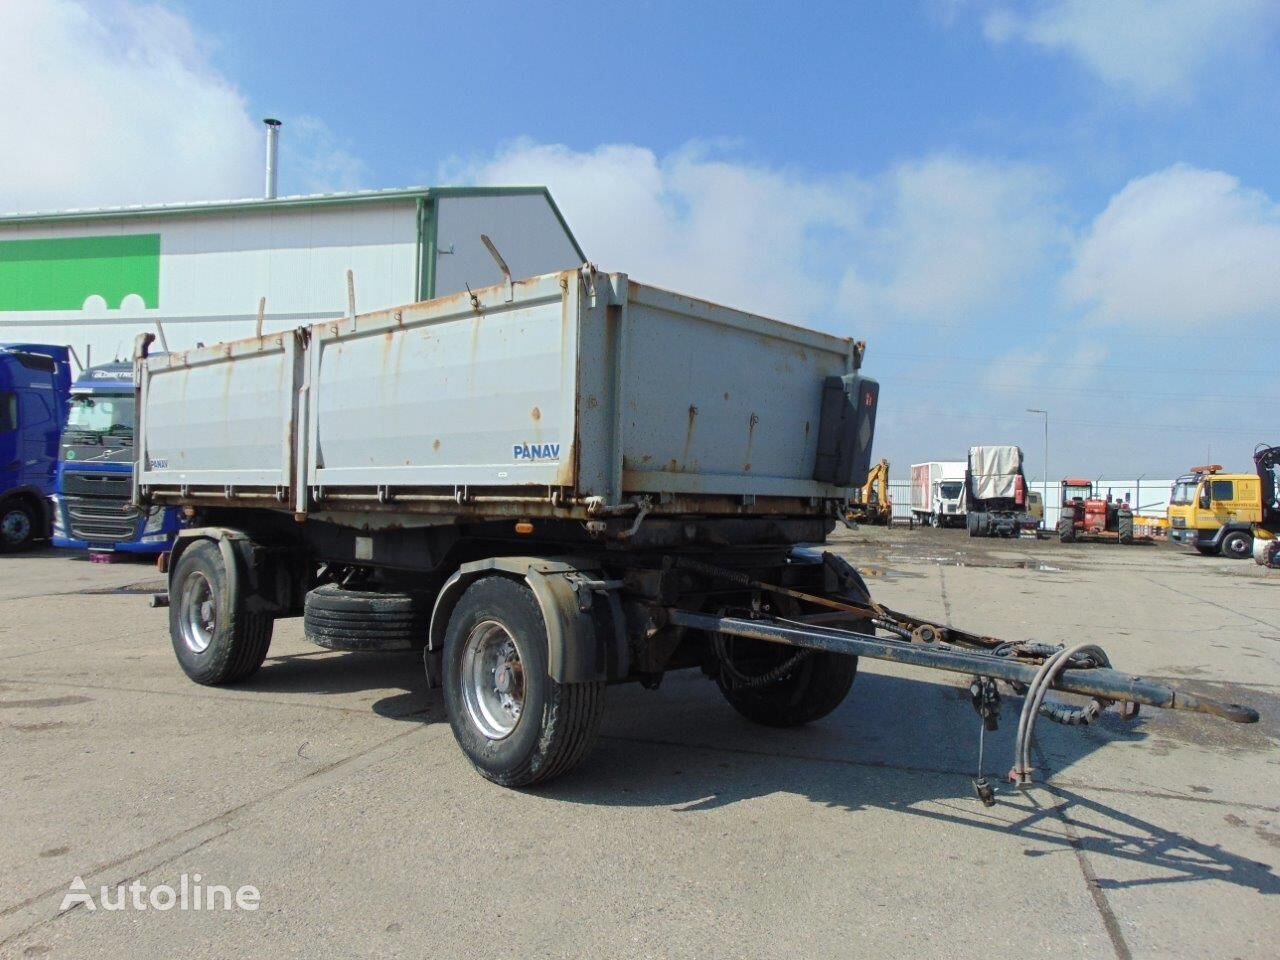 Panav trojstranka VIN 219 dump trailer